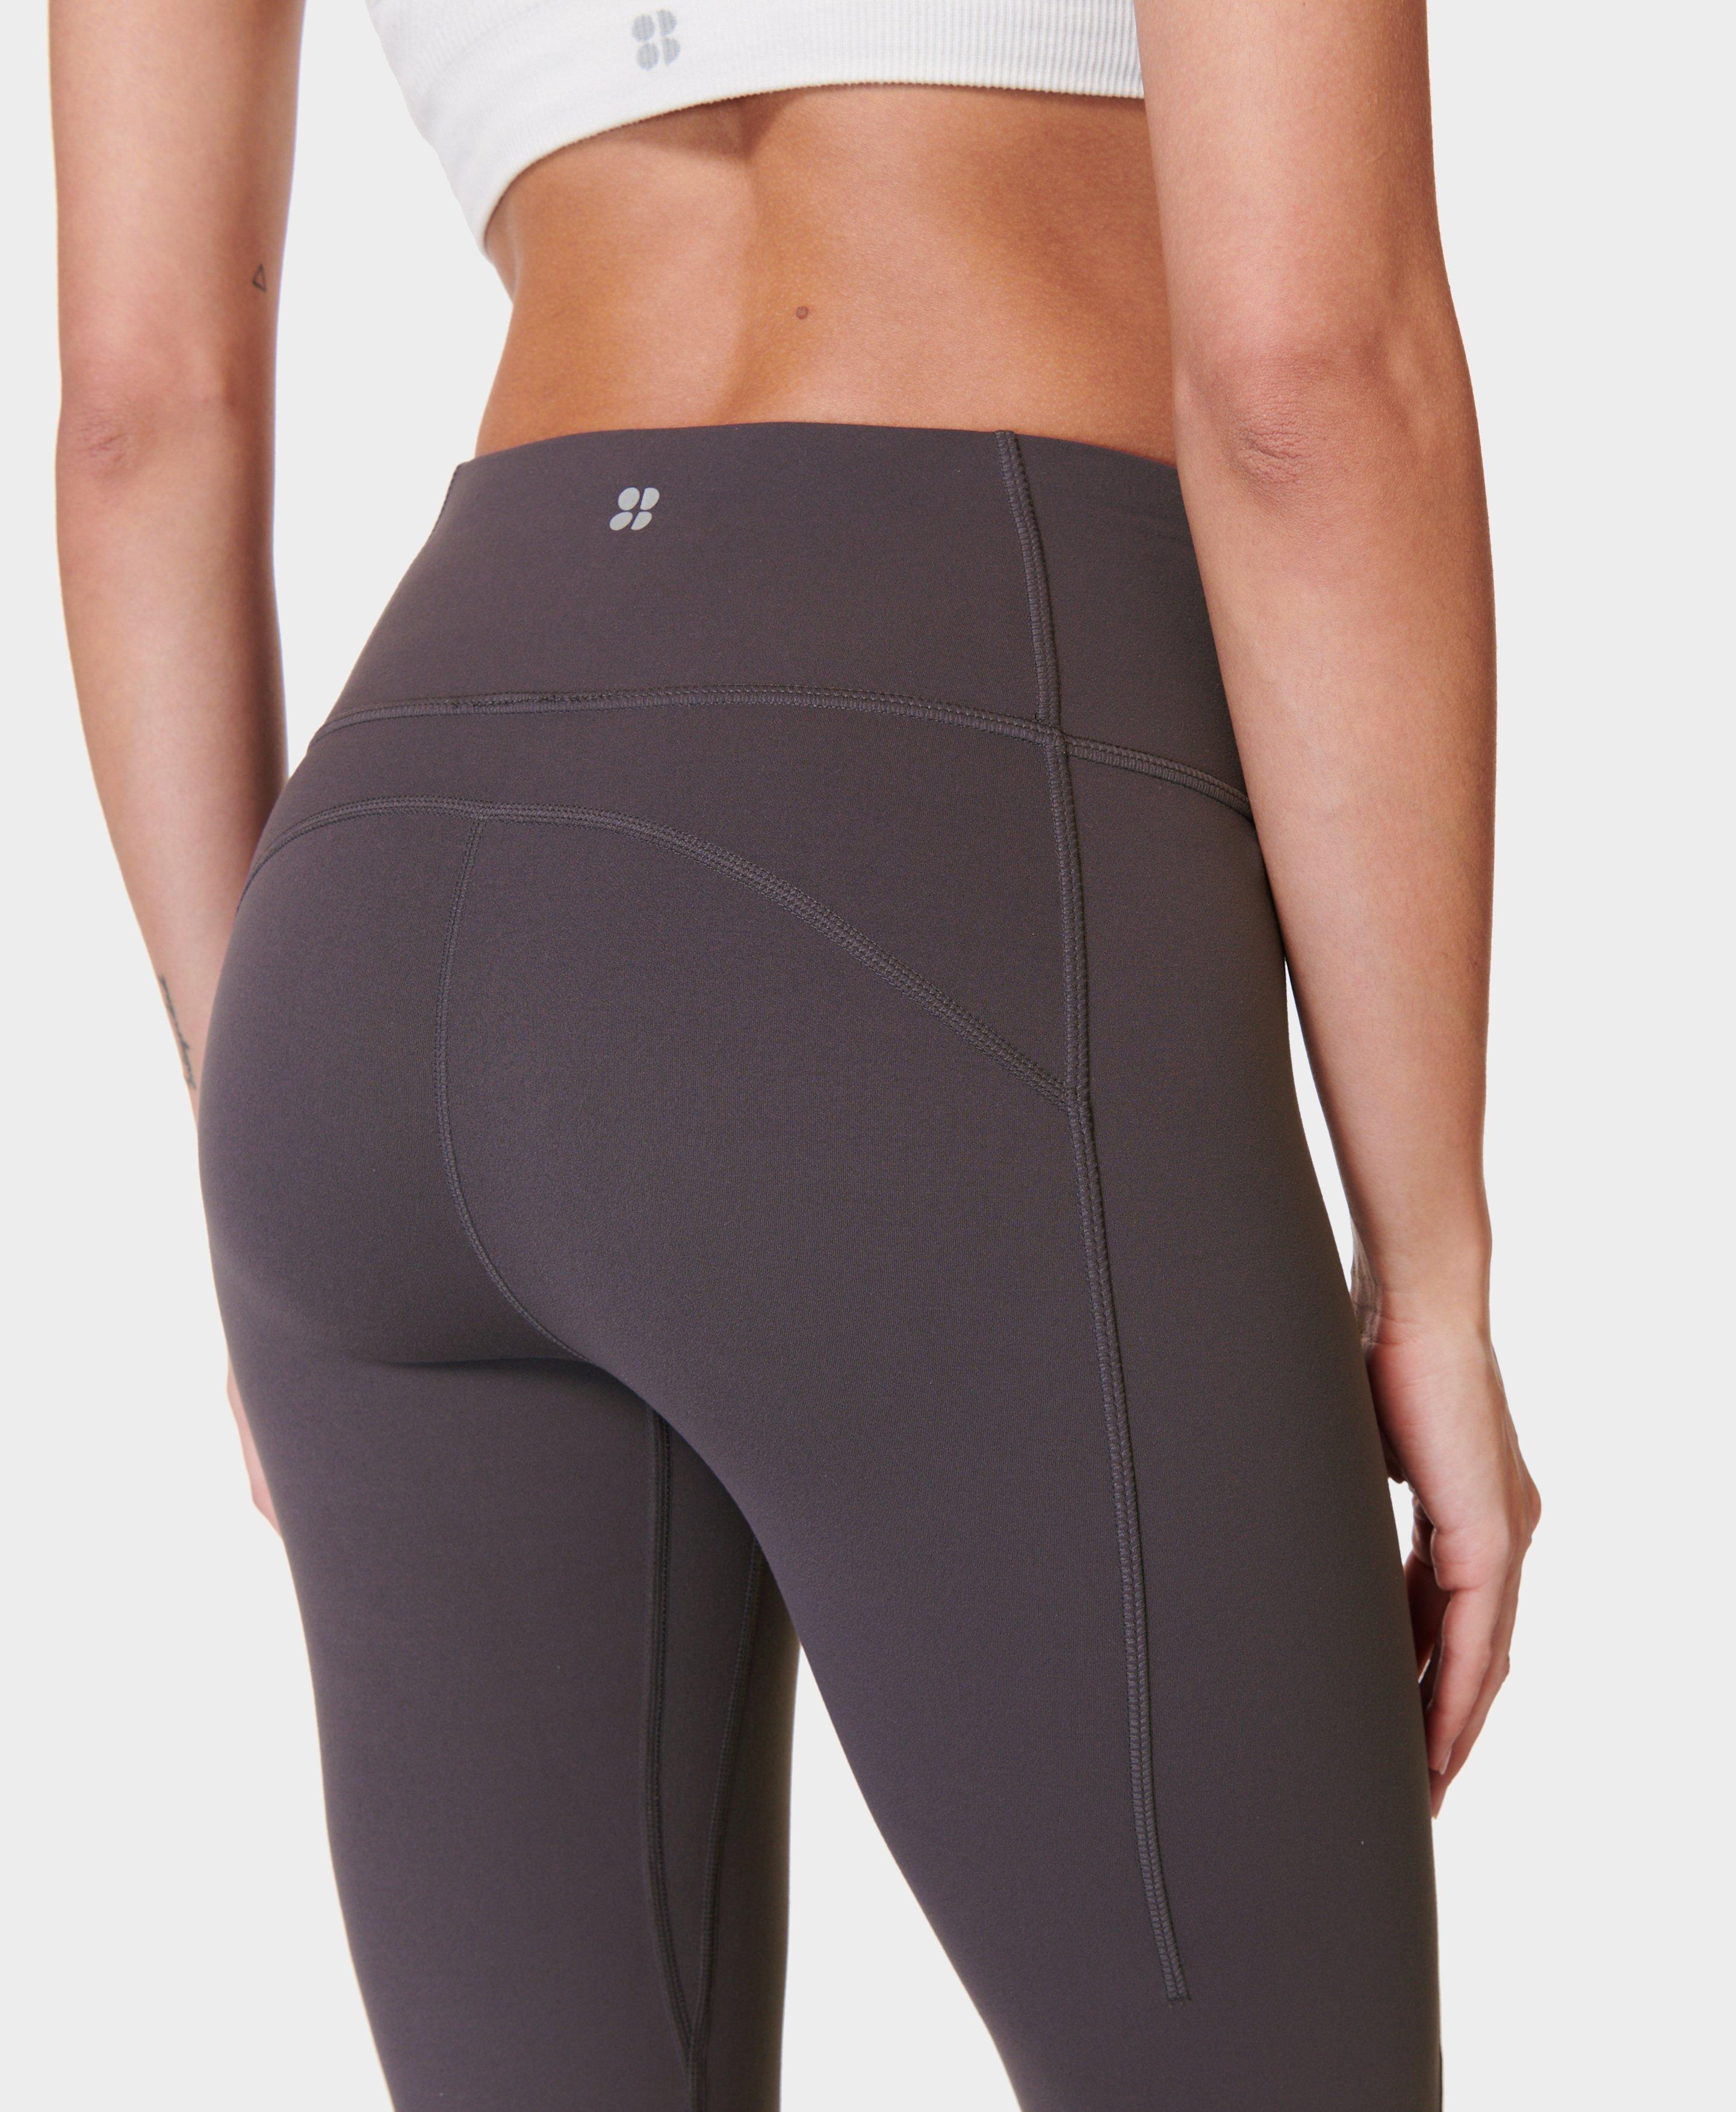 Sweaty Betty Women's Super Soft 30 Flare Yoga Trouser, Black